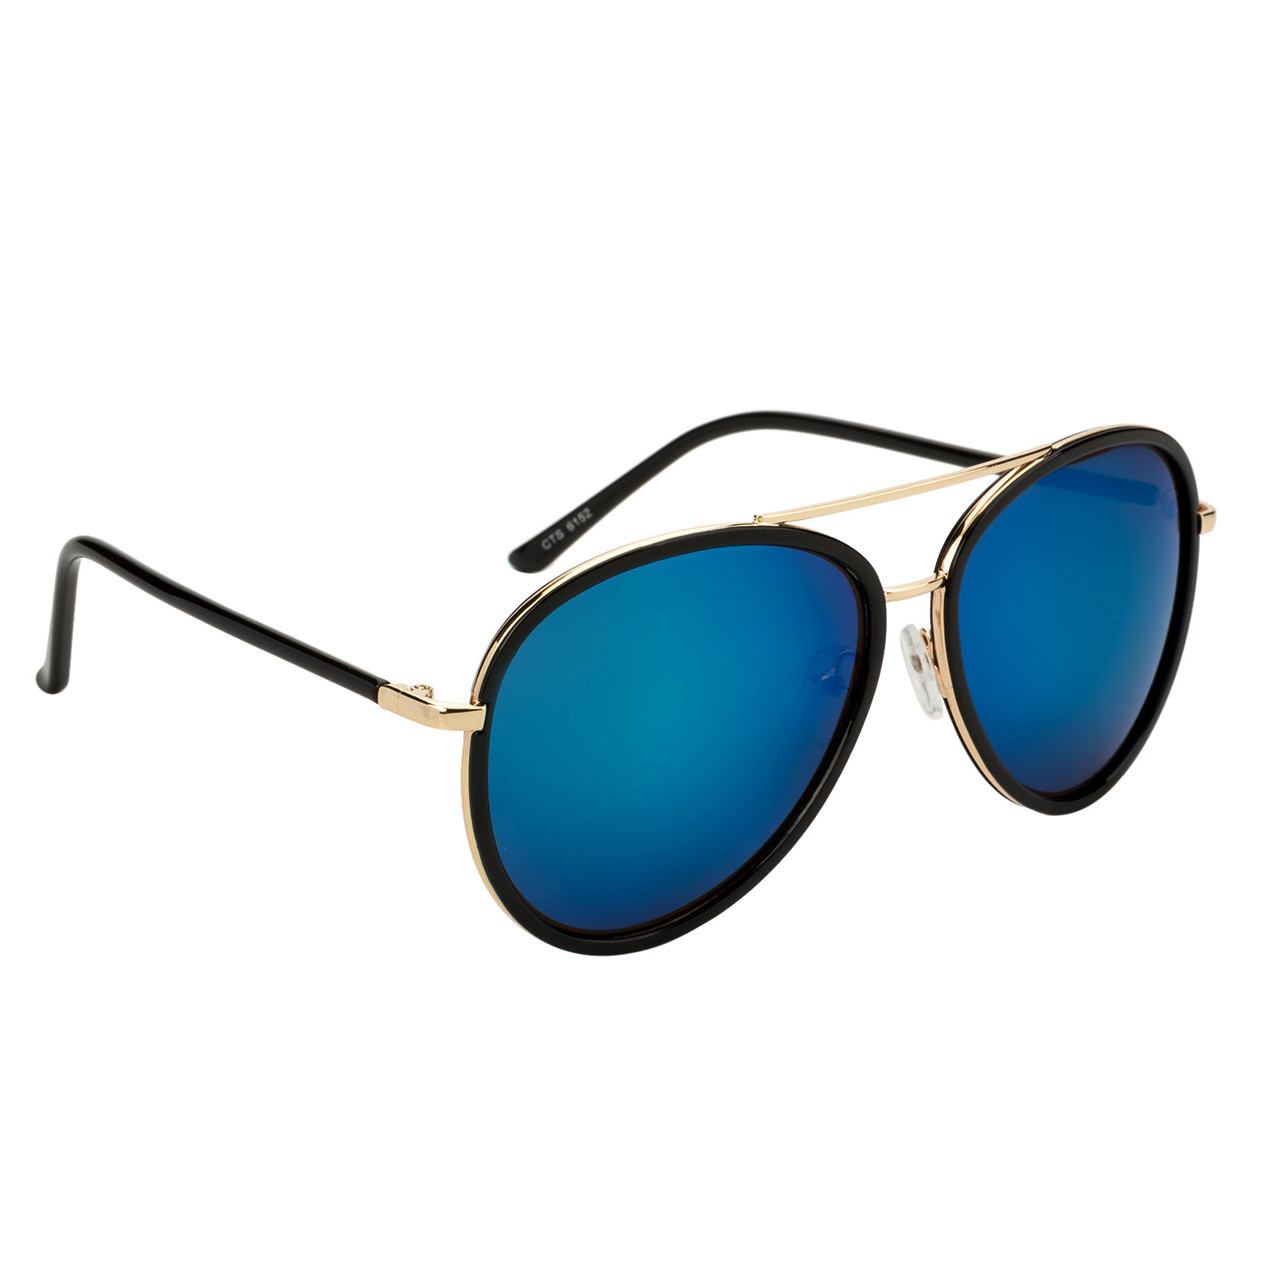 Wholesale Fashion Aviators - Style #6152 | CTS Wholesale Sunglasses